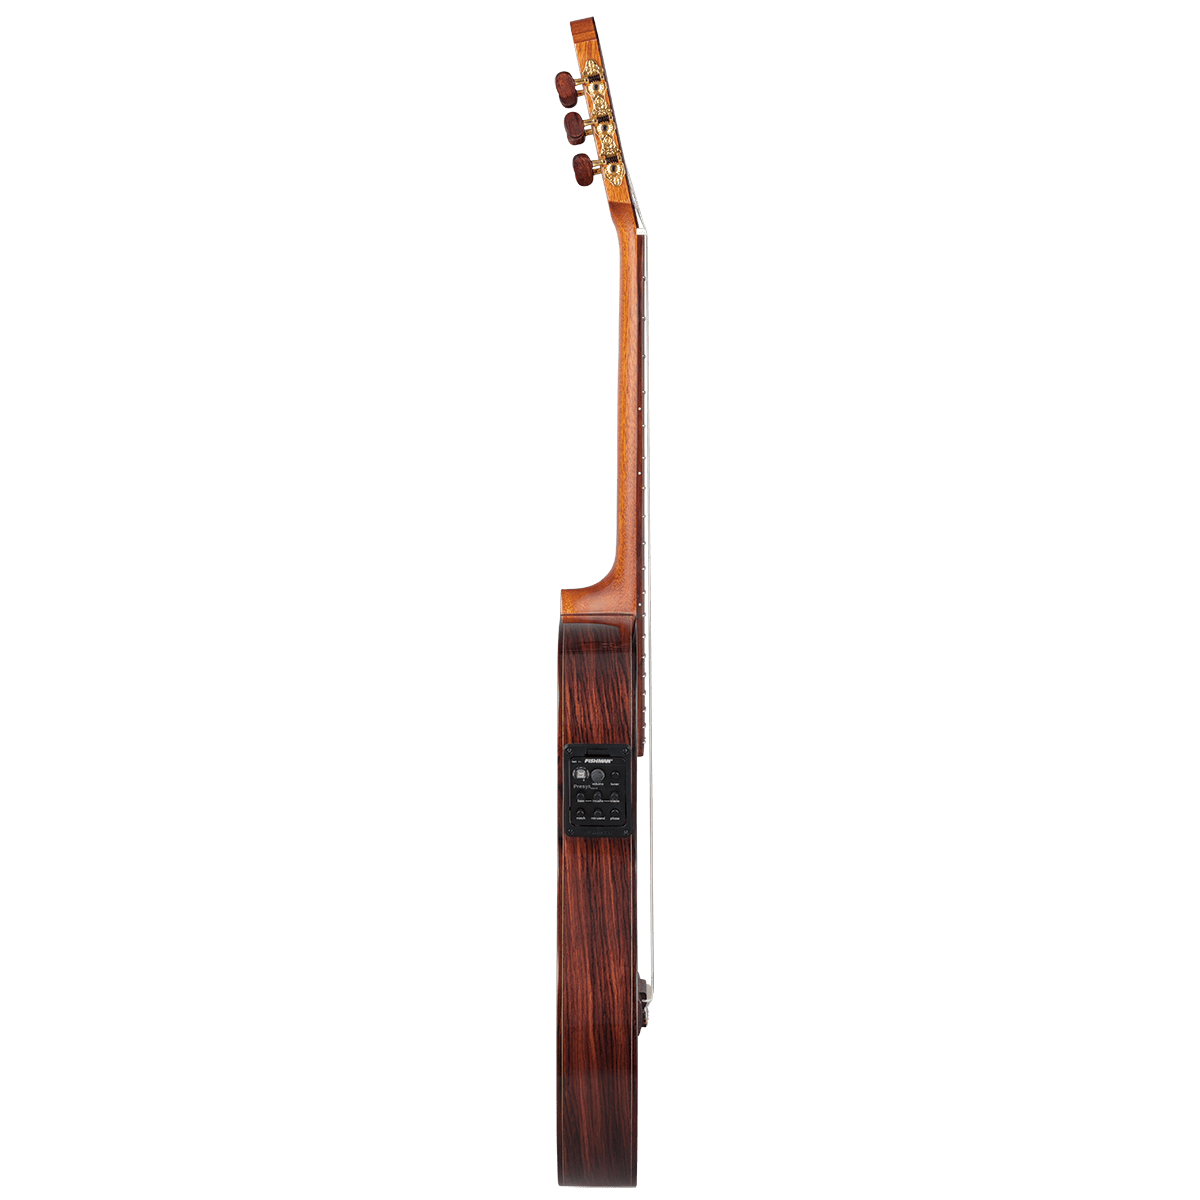 Kremona F65CW-TL Fiesta Thin Line C/E Classical Guitar with Case